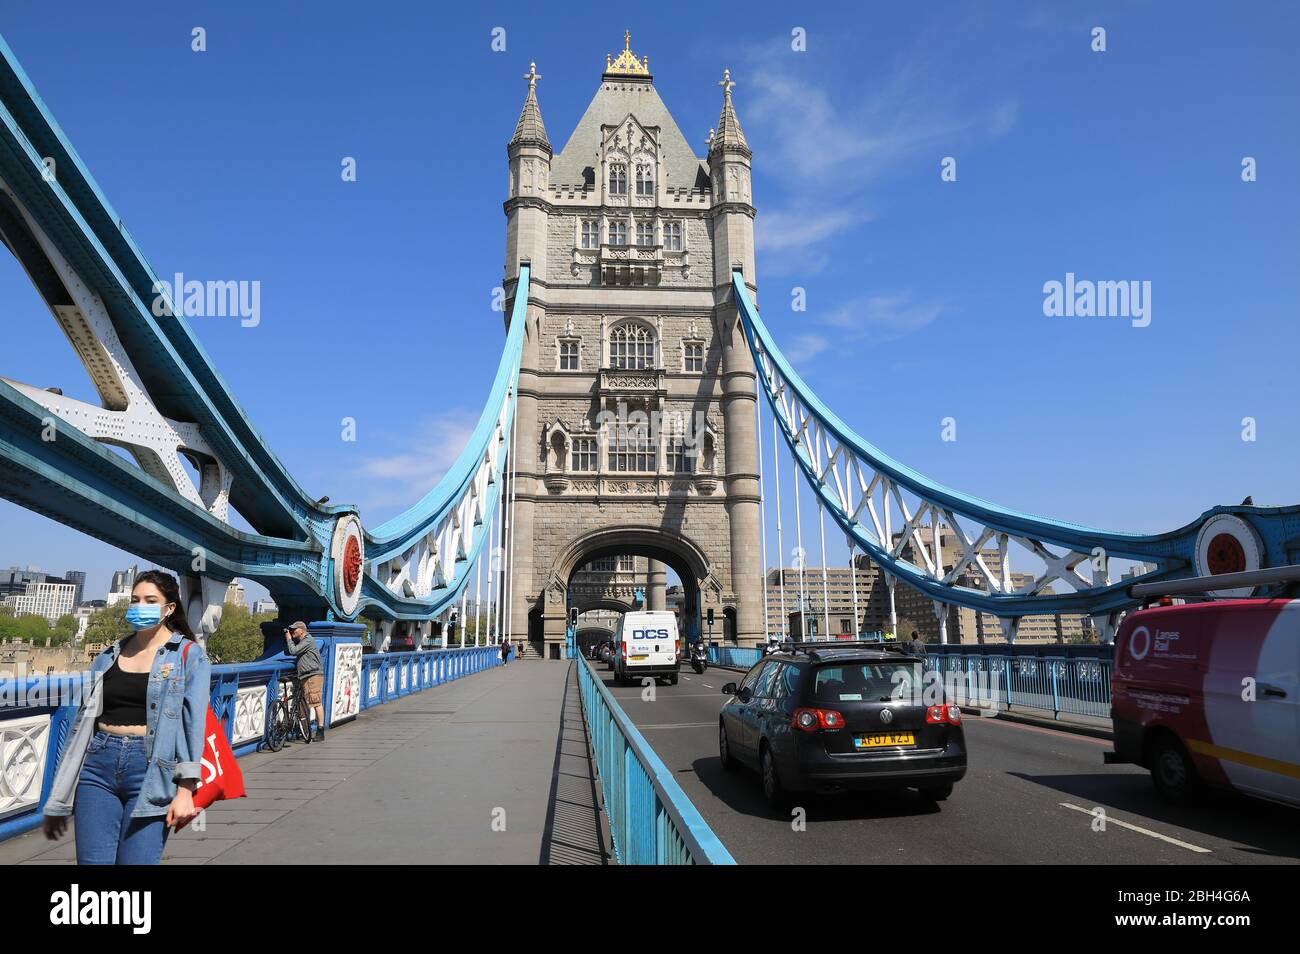 Traffic getting a little busier on Tower Bridge during the coronavirus pandemic lockdown, in London, UK Stock Photo